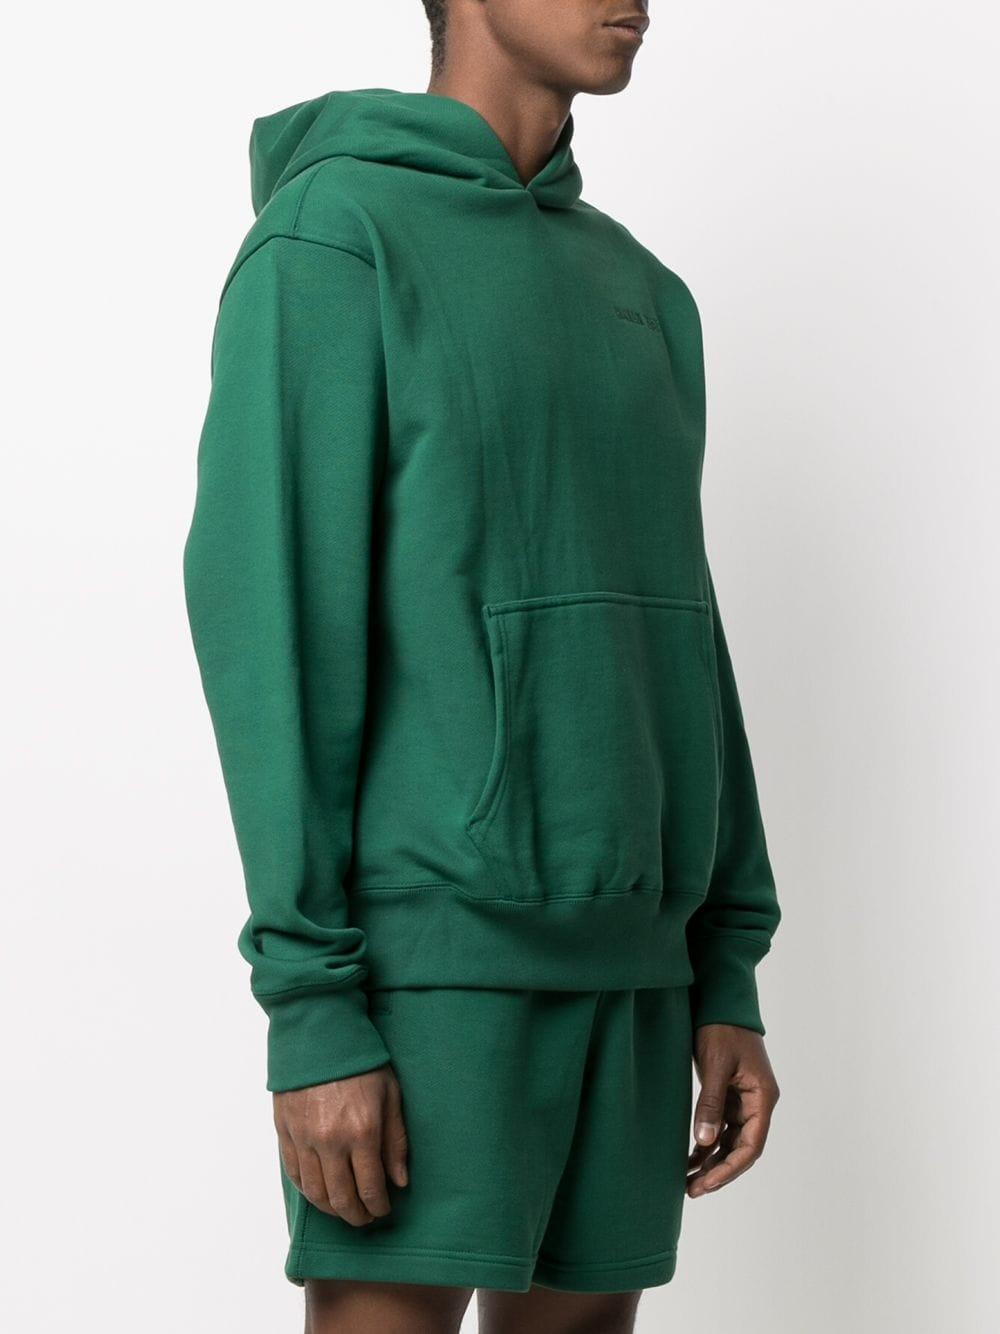 adidas X Pharrell Williams Human Race Hoodies in Green for Men | Lyst